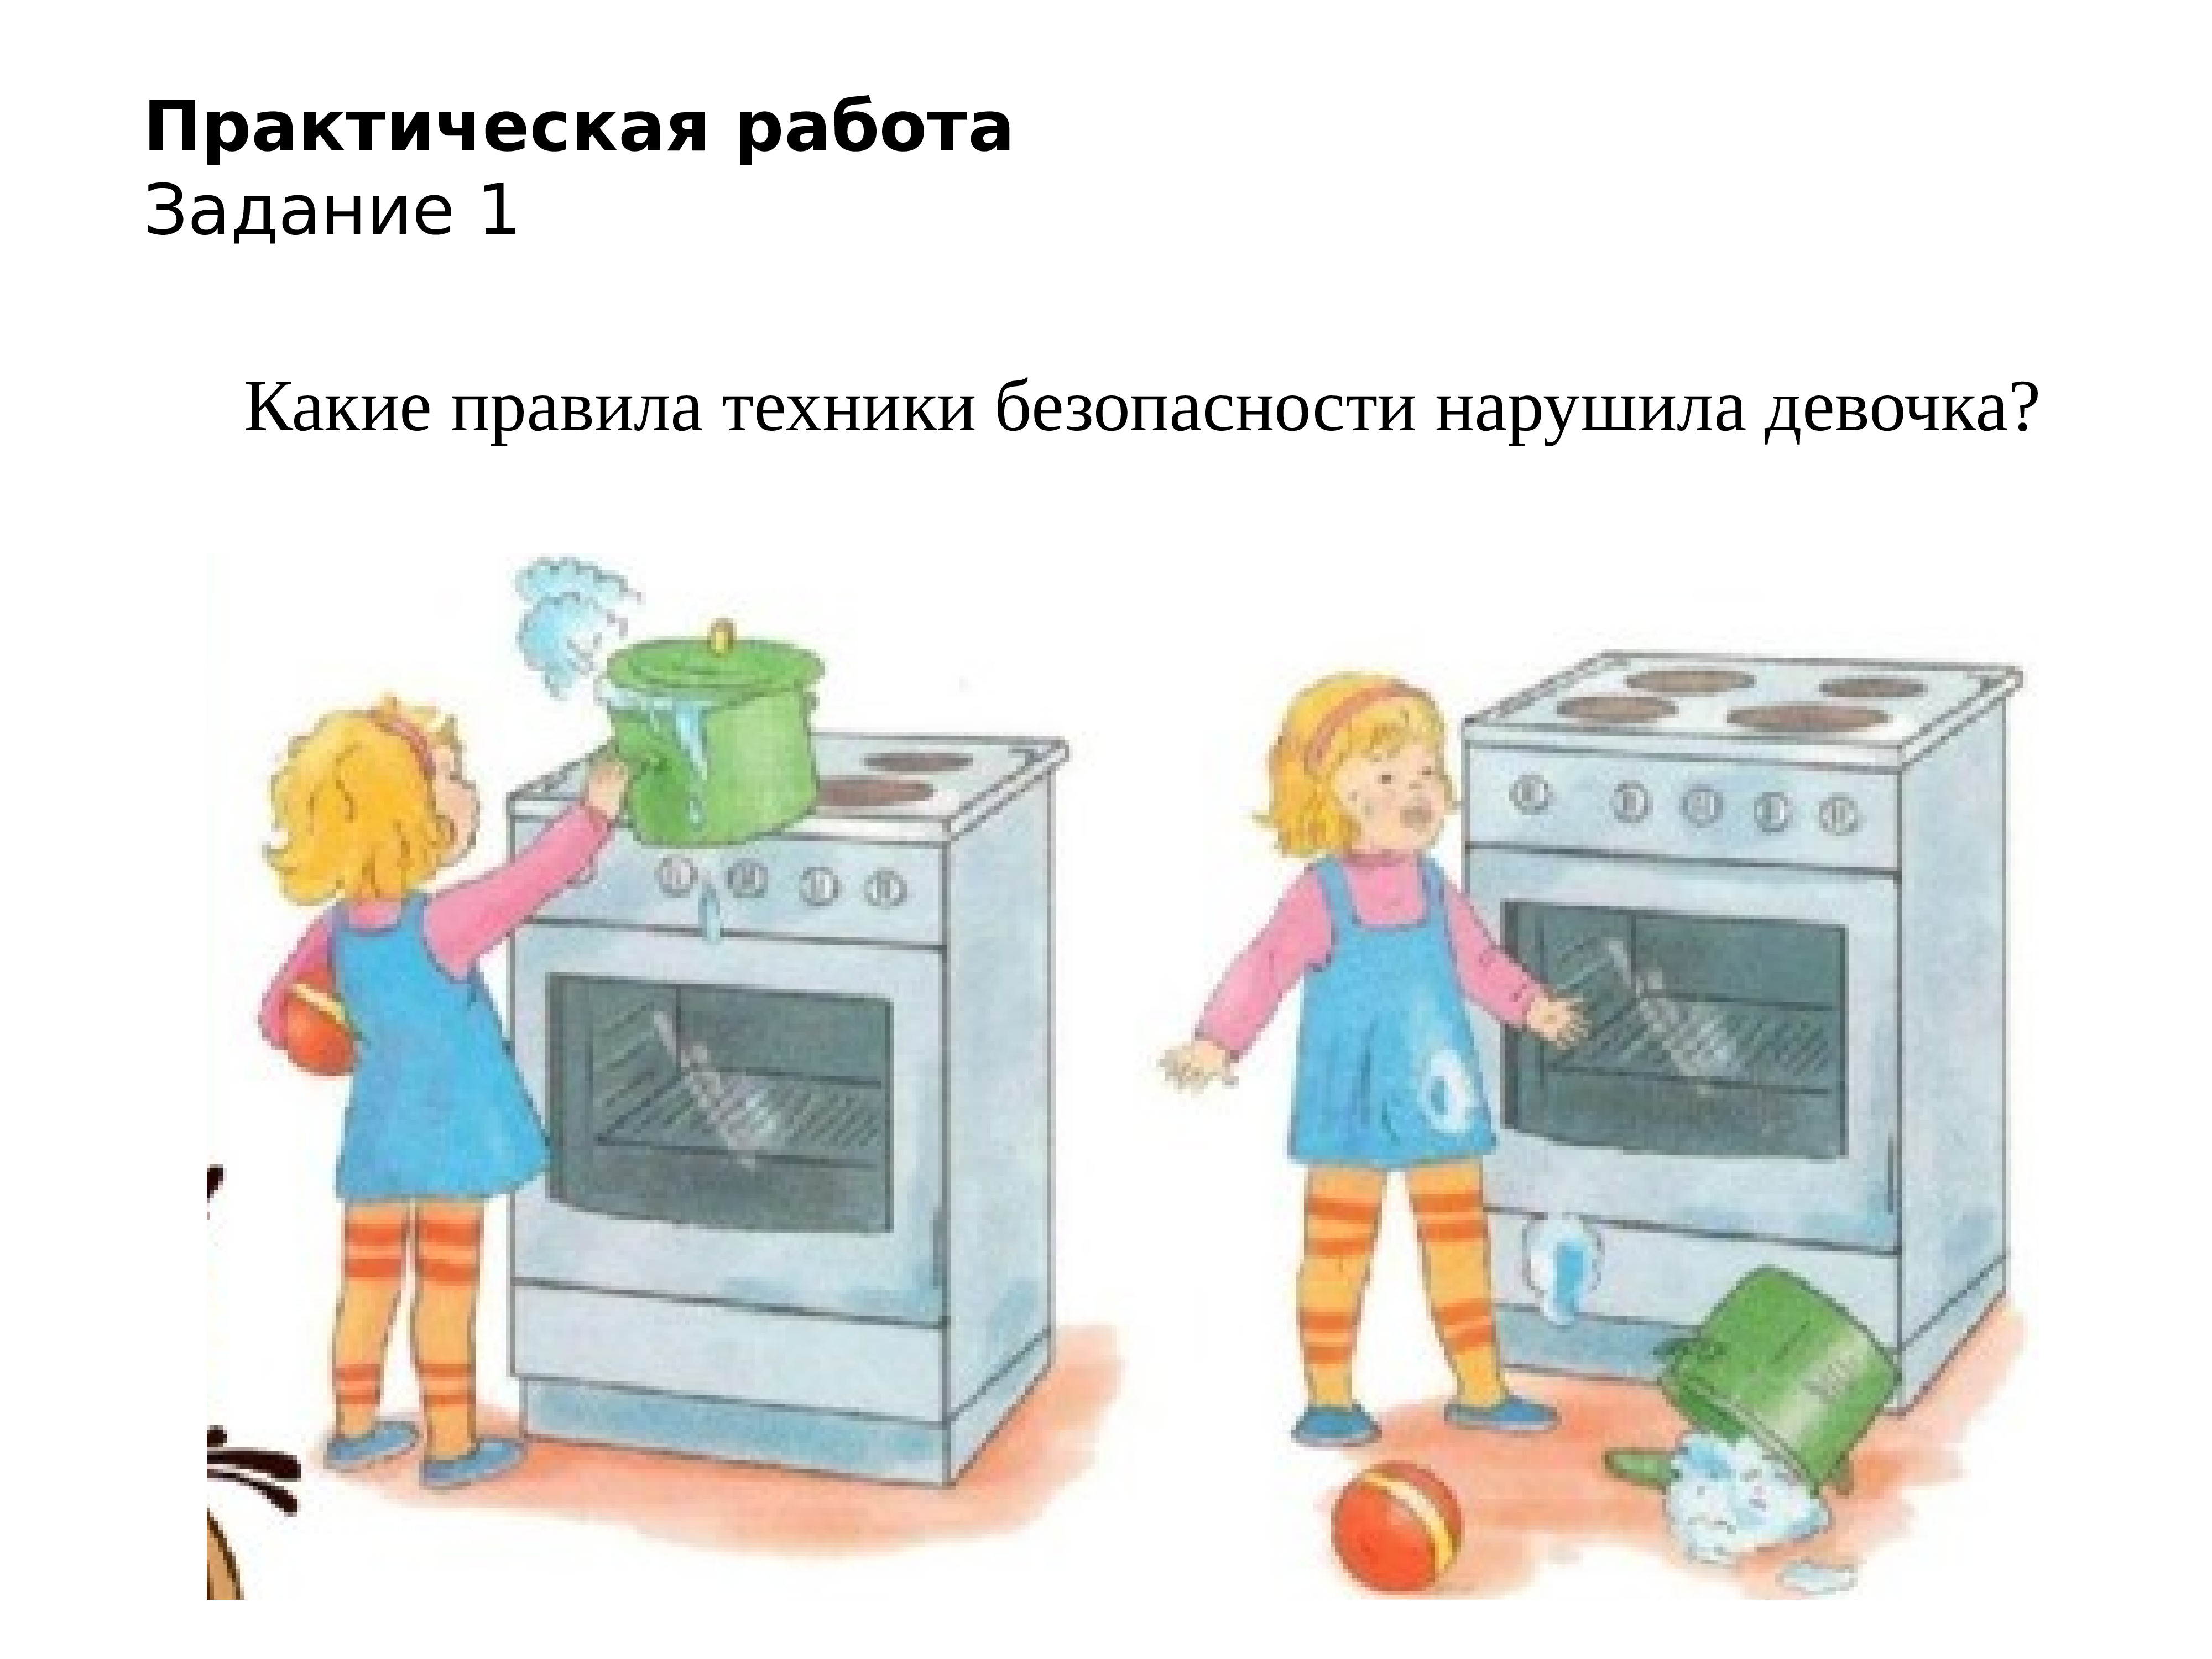 Правила техники безопасности на кухне для детей